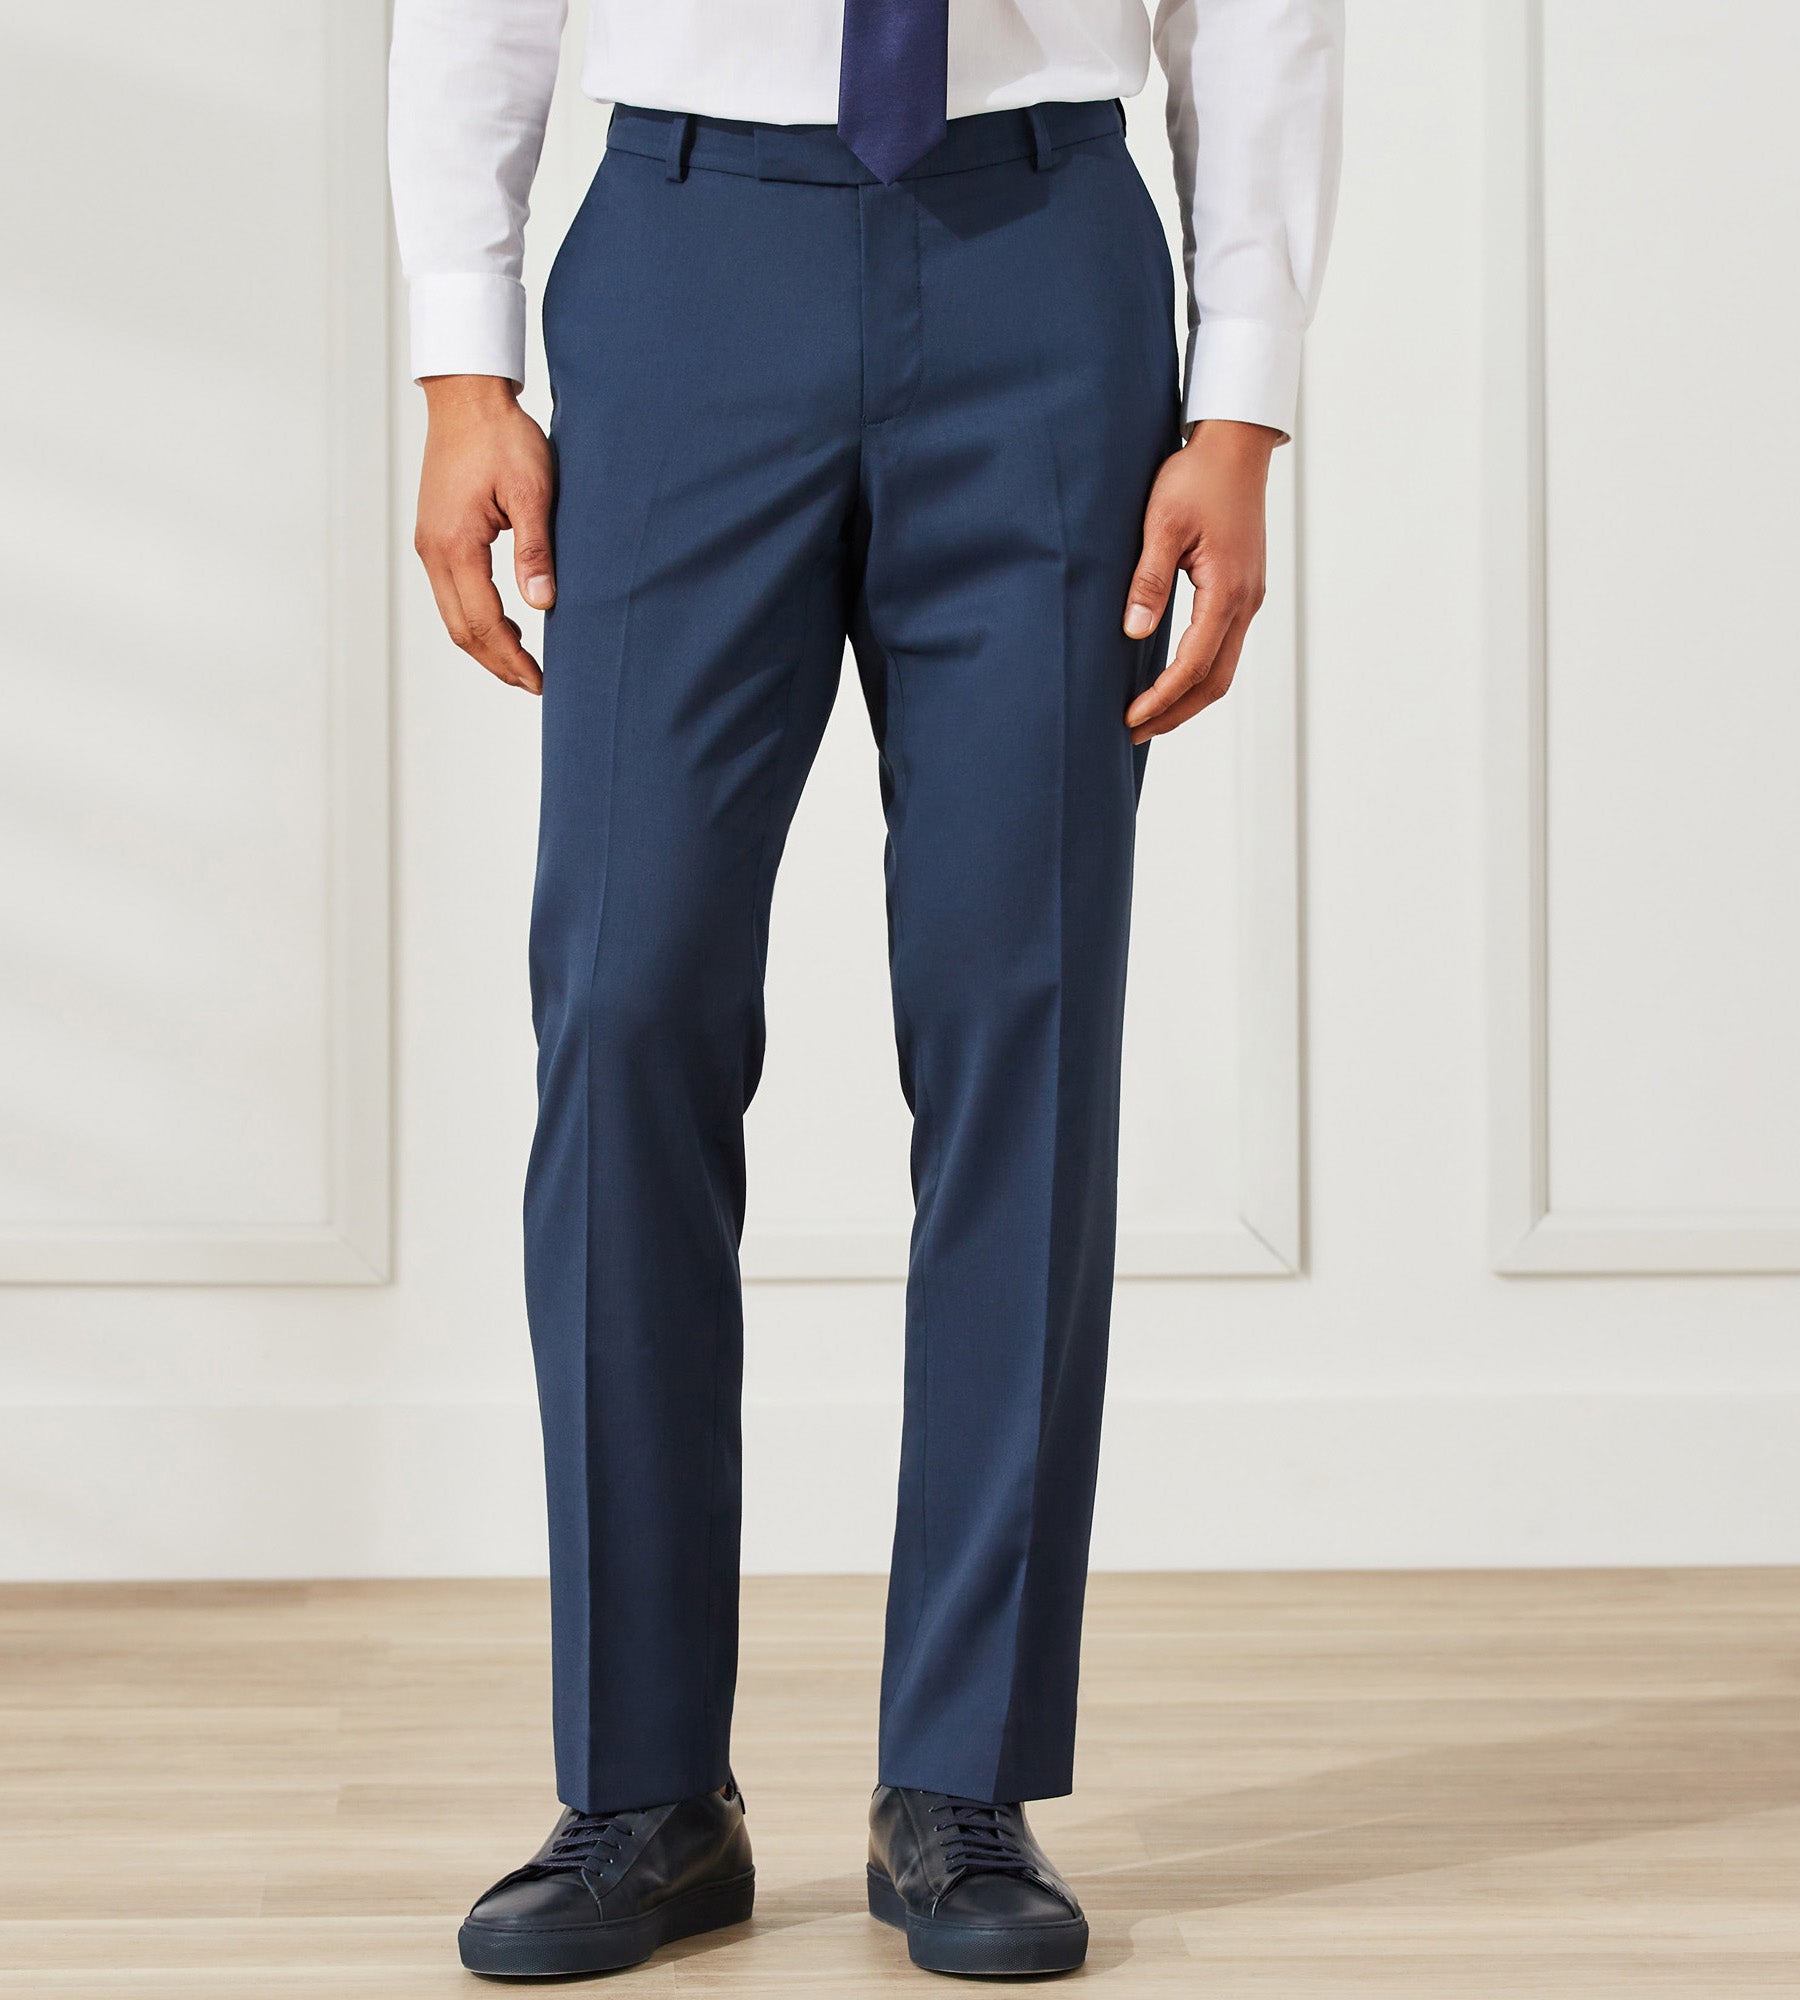 Mens New Carabou Formal Pant Trouser Expandaband Black Grey Navy Taupe  Designer